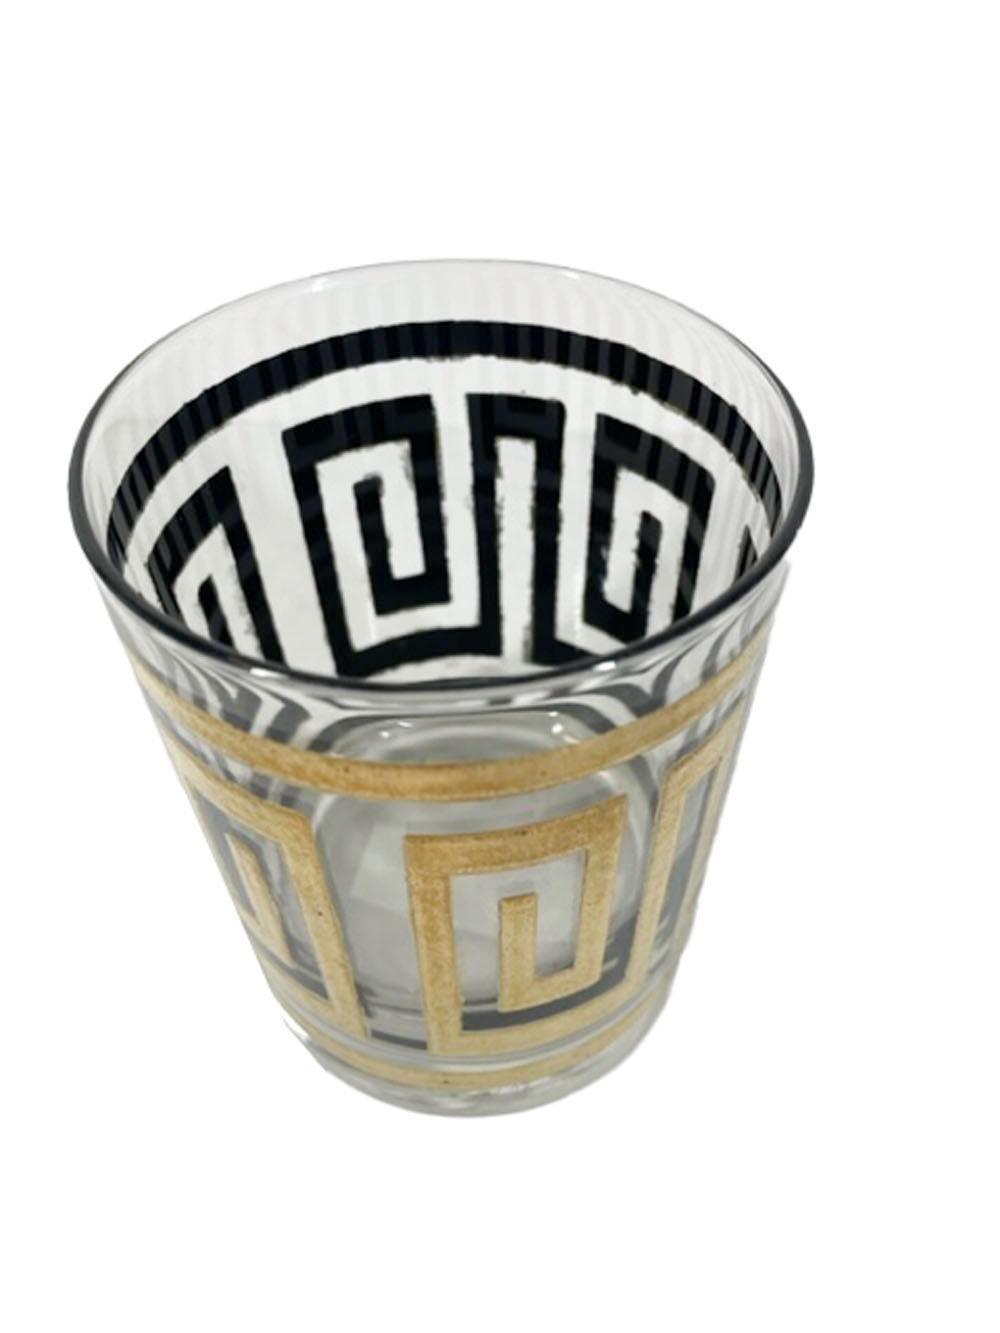 American Vintage Culver Rocks Glasses with 22 Karat Gold Raised Greek Key Decoration